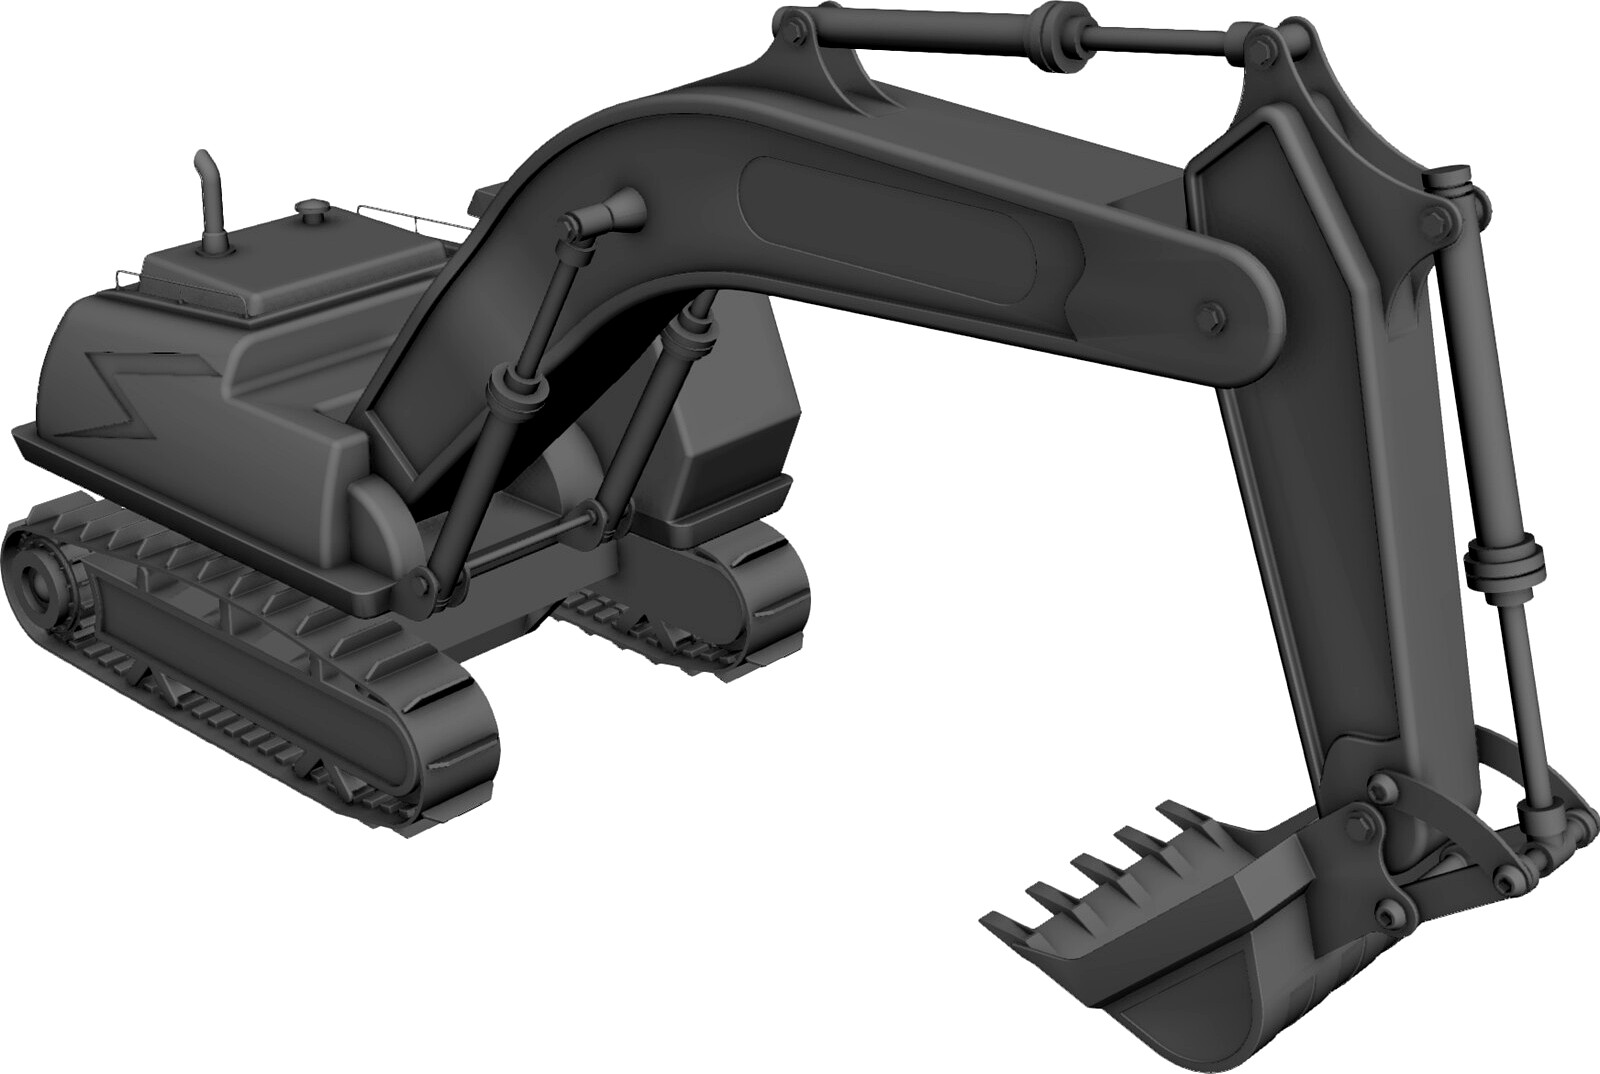 Excavator 3D CAD Model